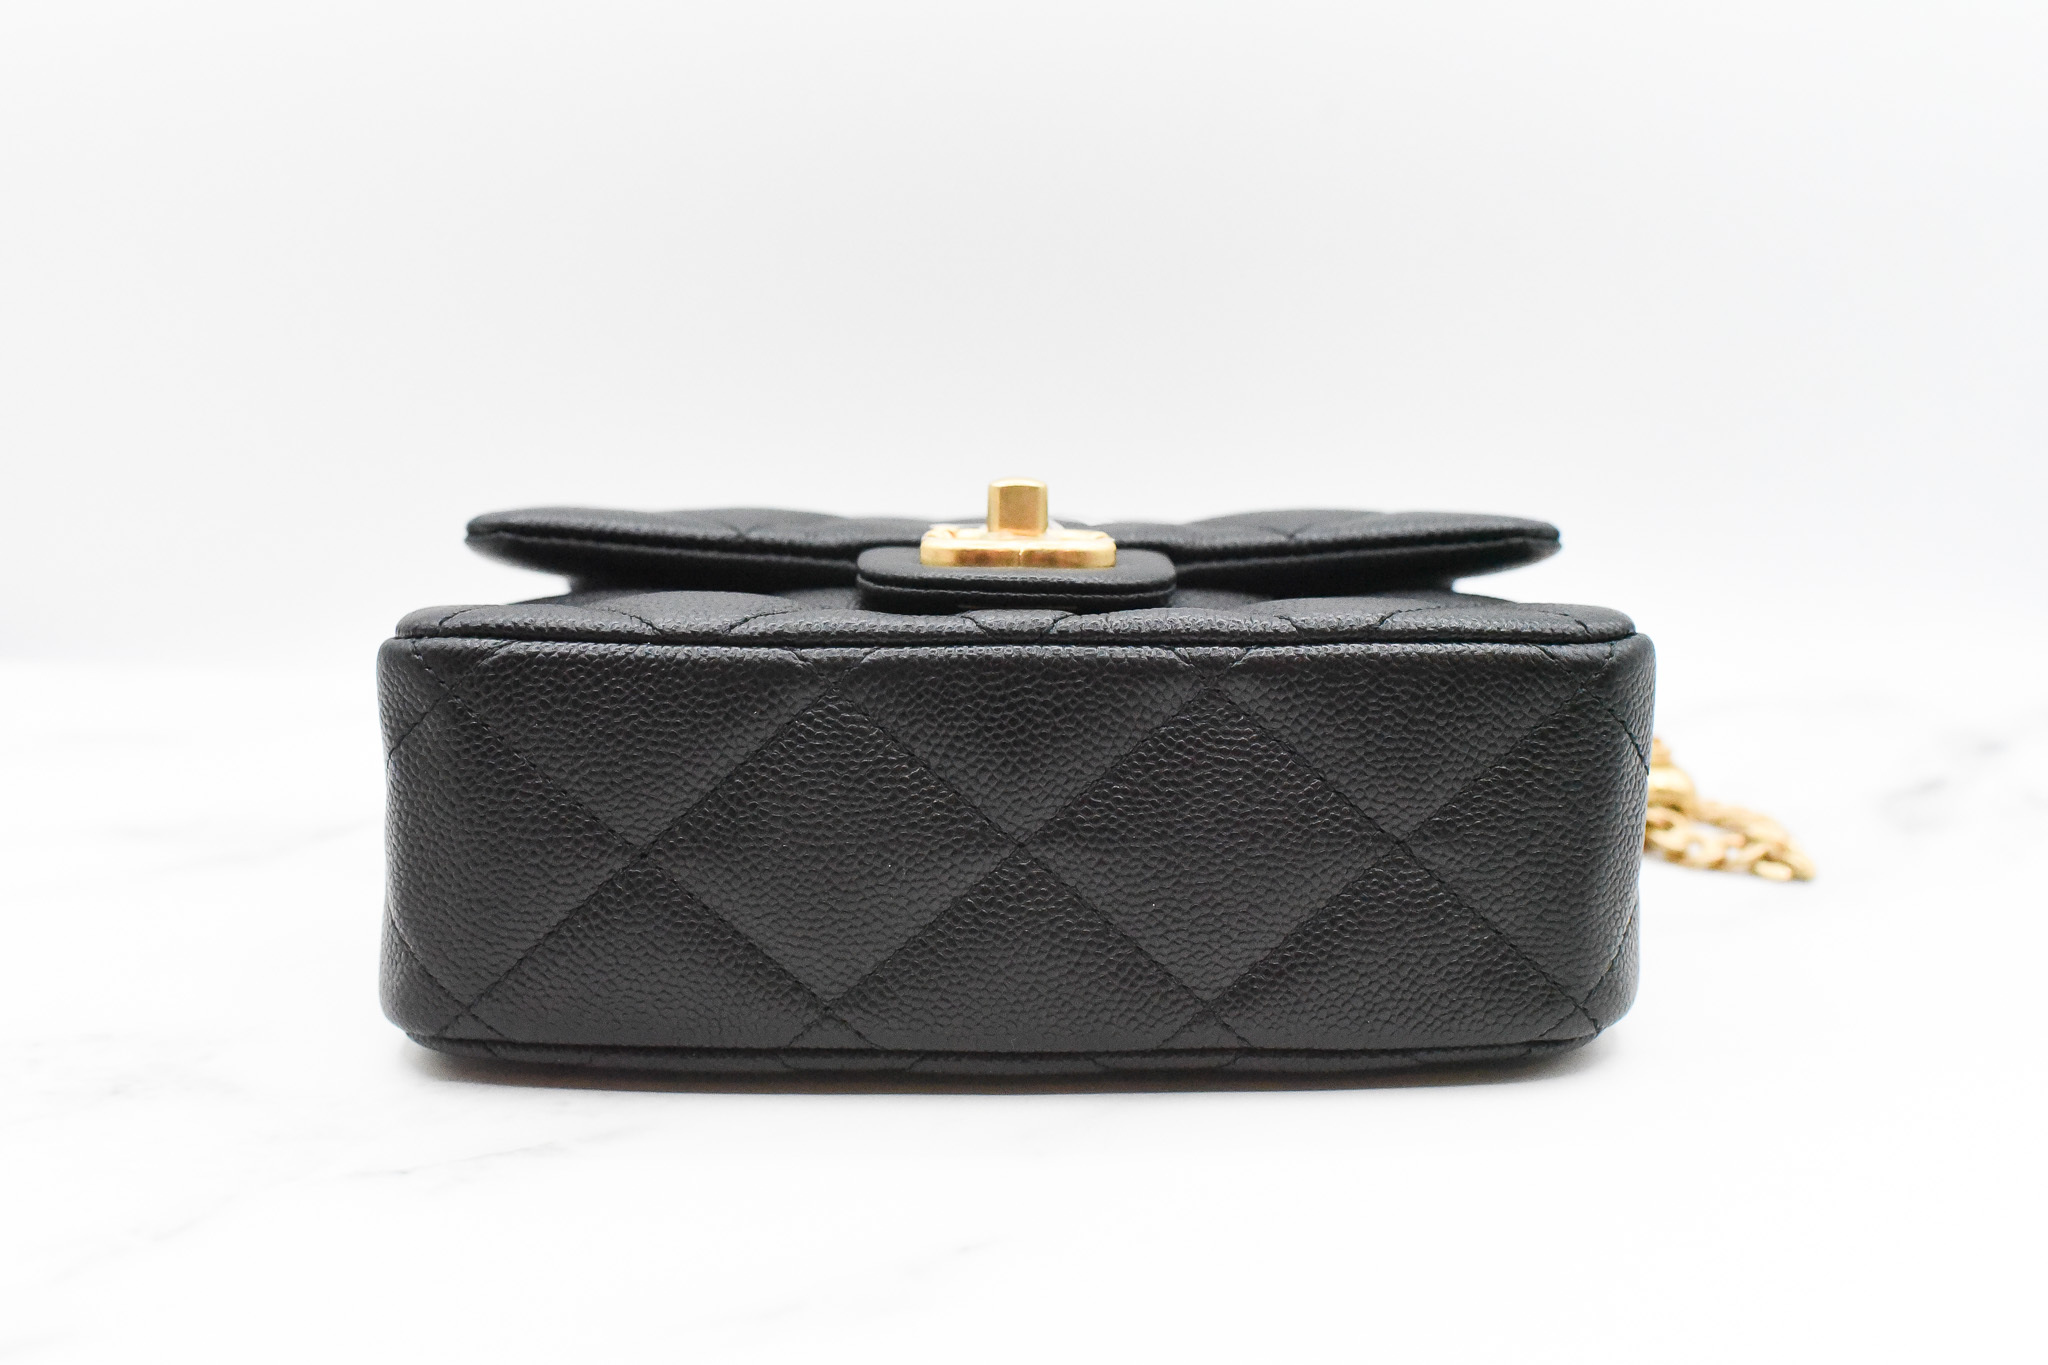 Chanel Seasonal Sweetheart Small Flap, Black Caviar Leather, Gold Hardware,  New in Box GA001